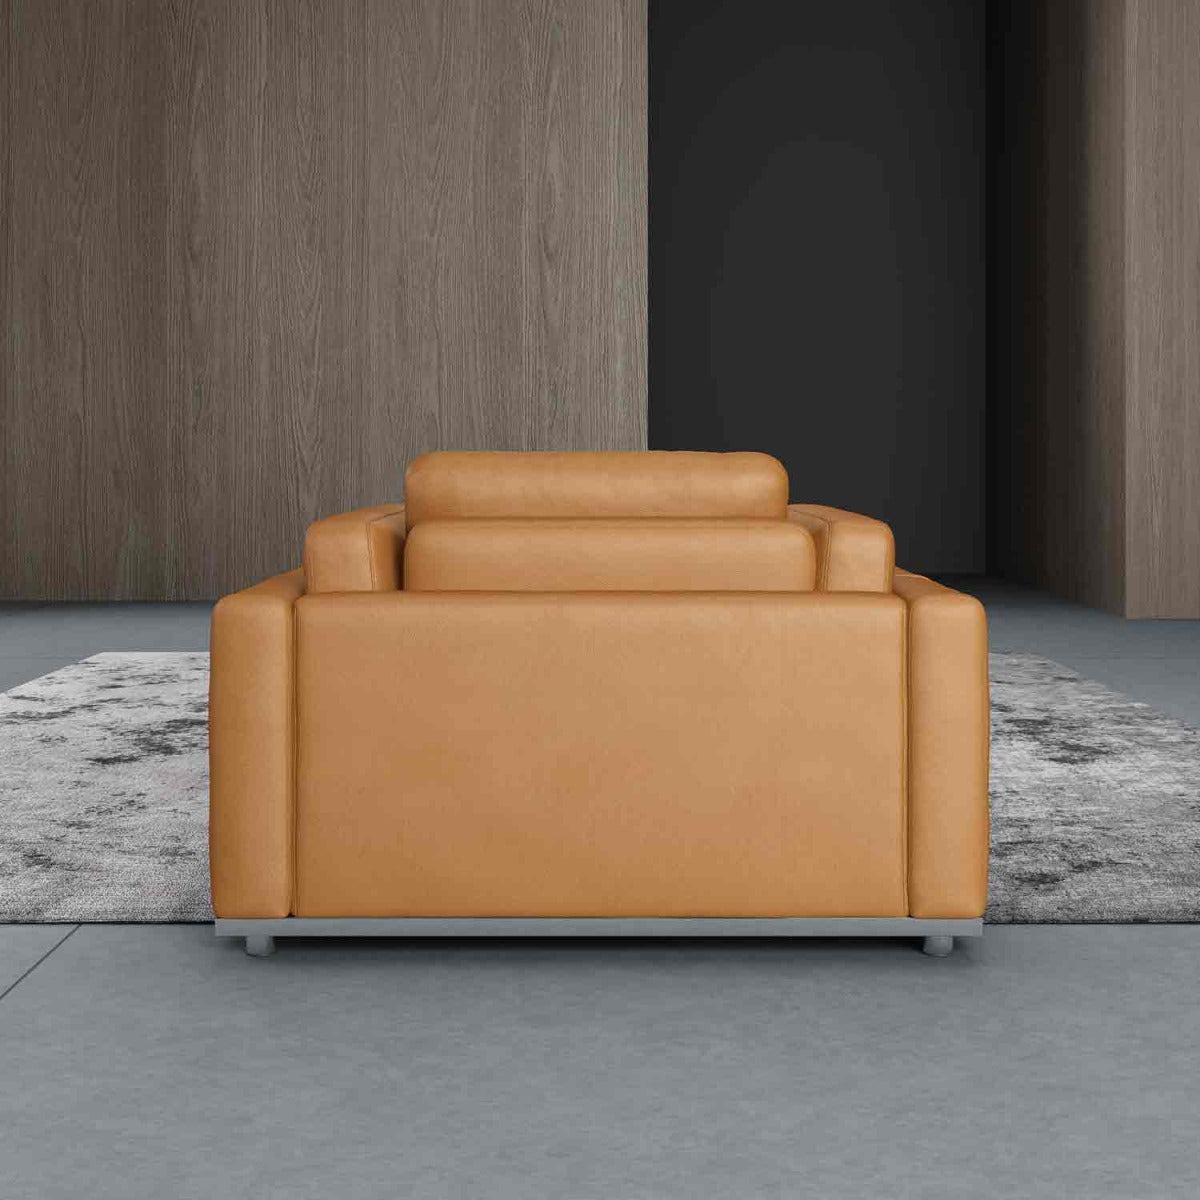 European Furniture - Picasso 2 Piece Living Room Set in Cognac - 25552-2SET - New Star Living